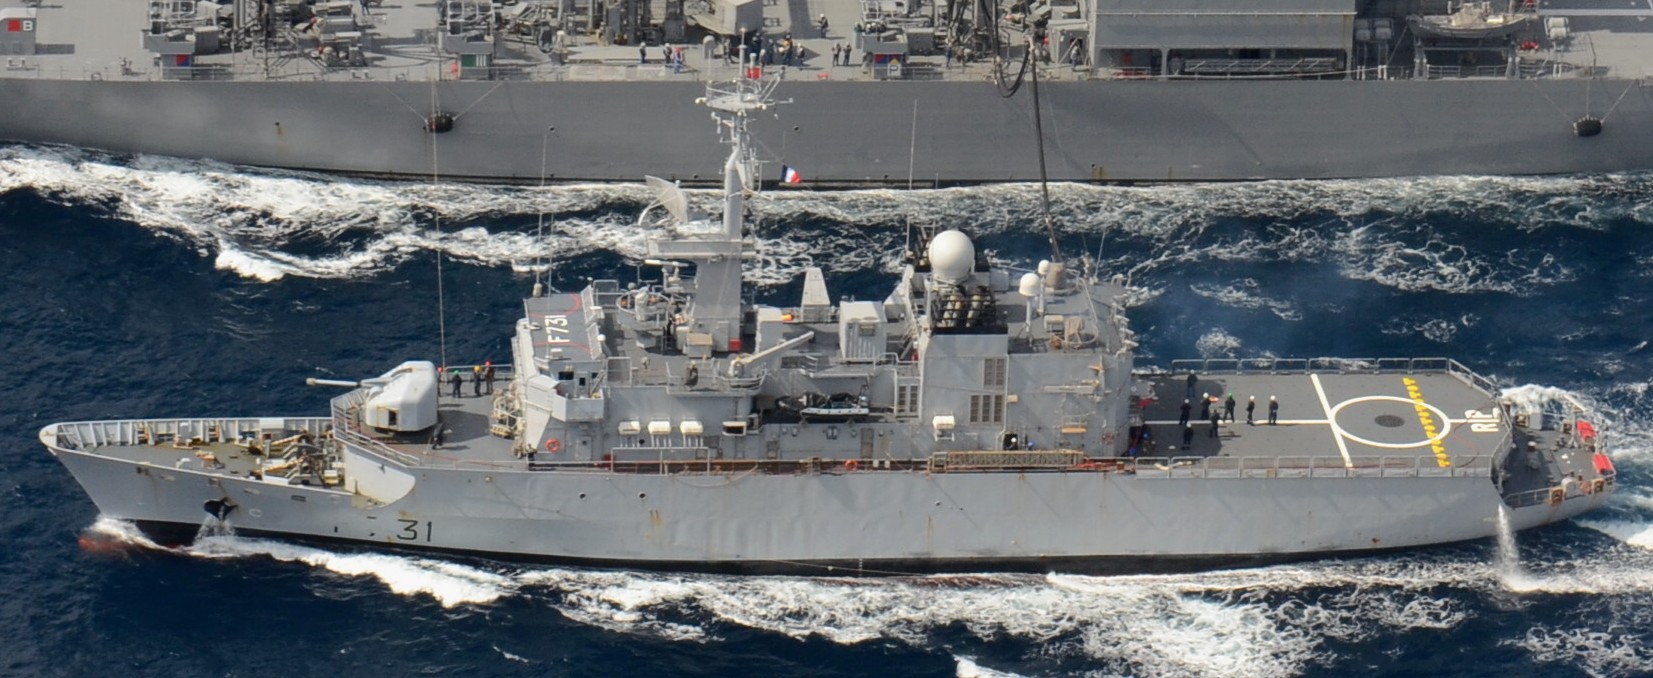 f-731 fs prairial floreal class frigate french navy marine nationale fregate surveillance 16